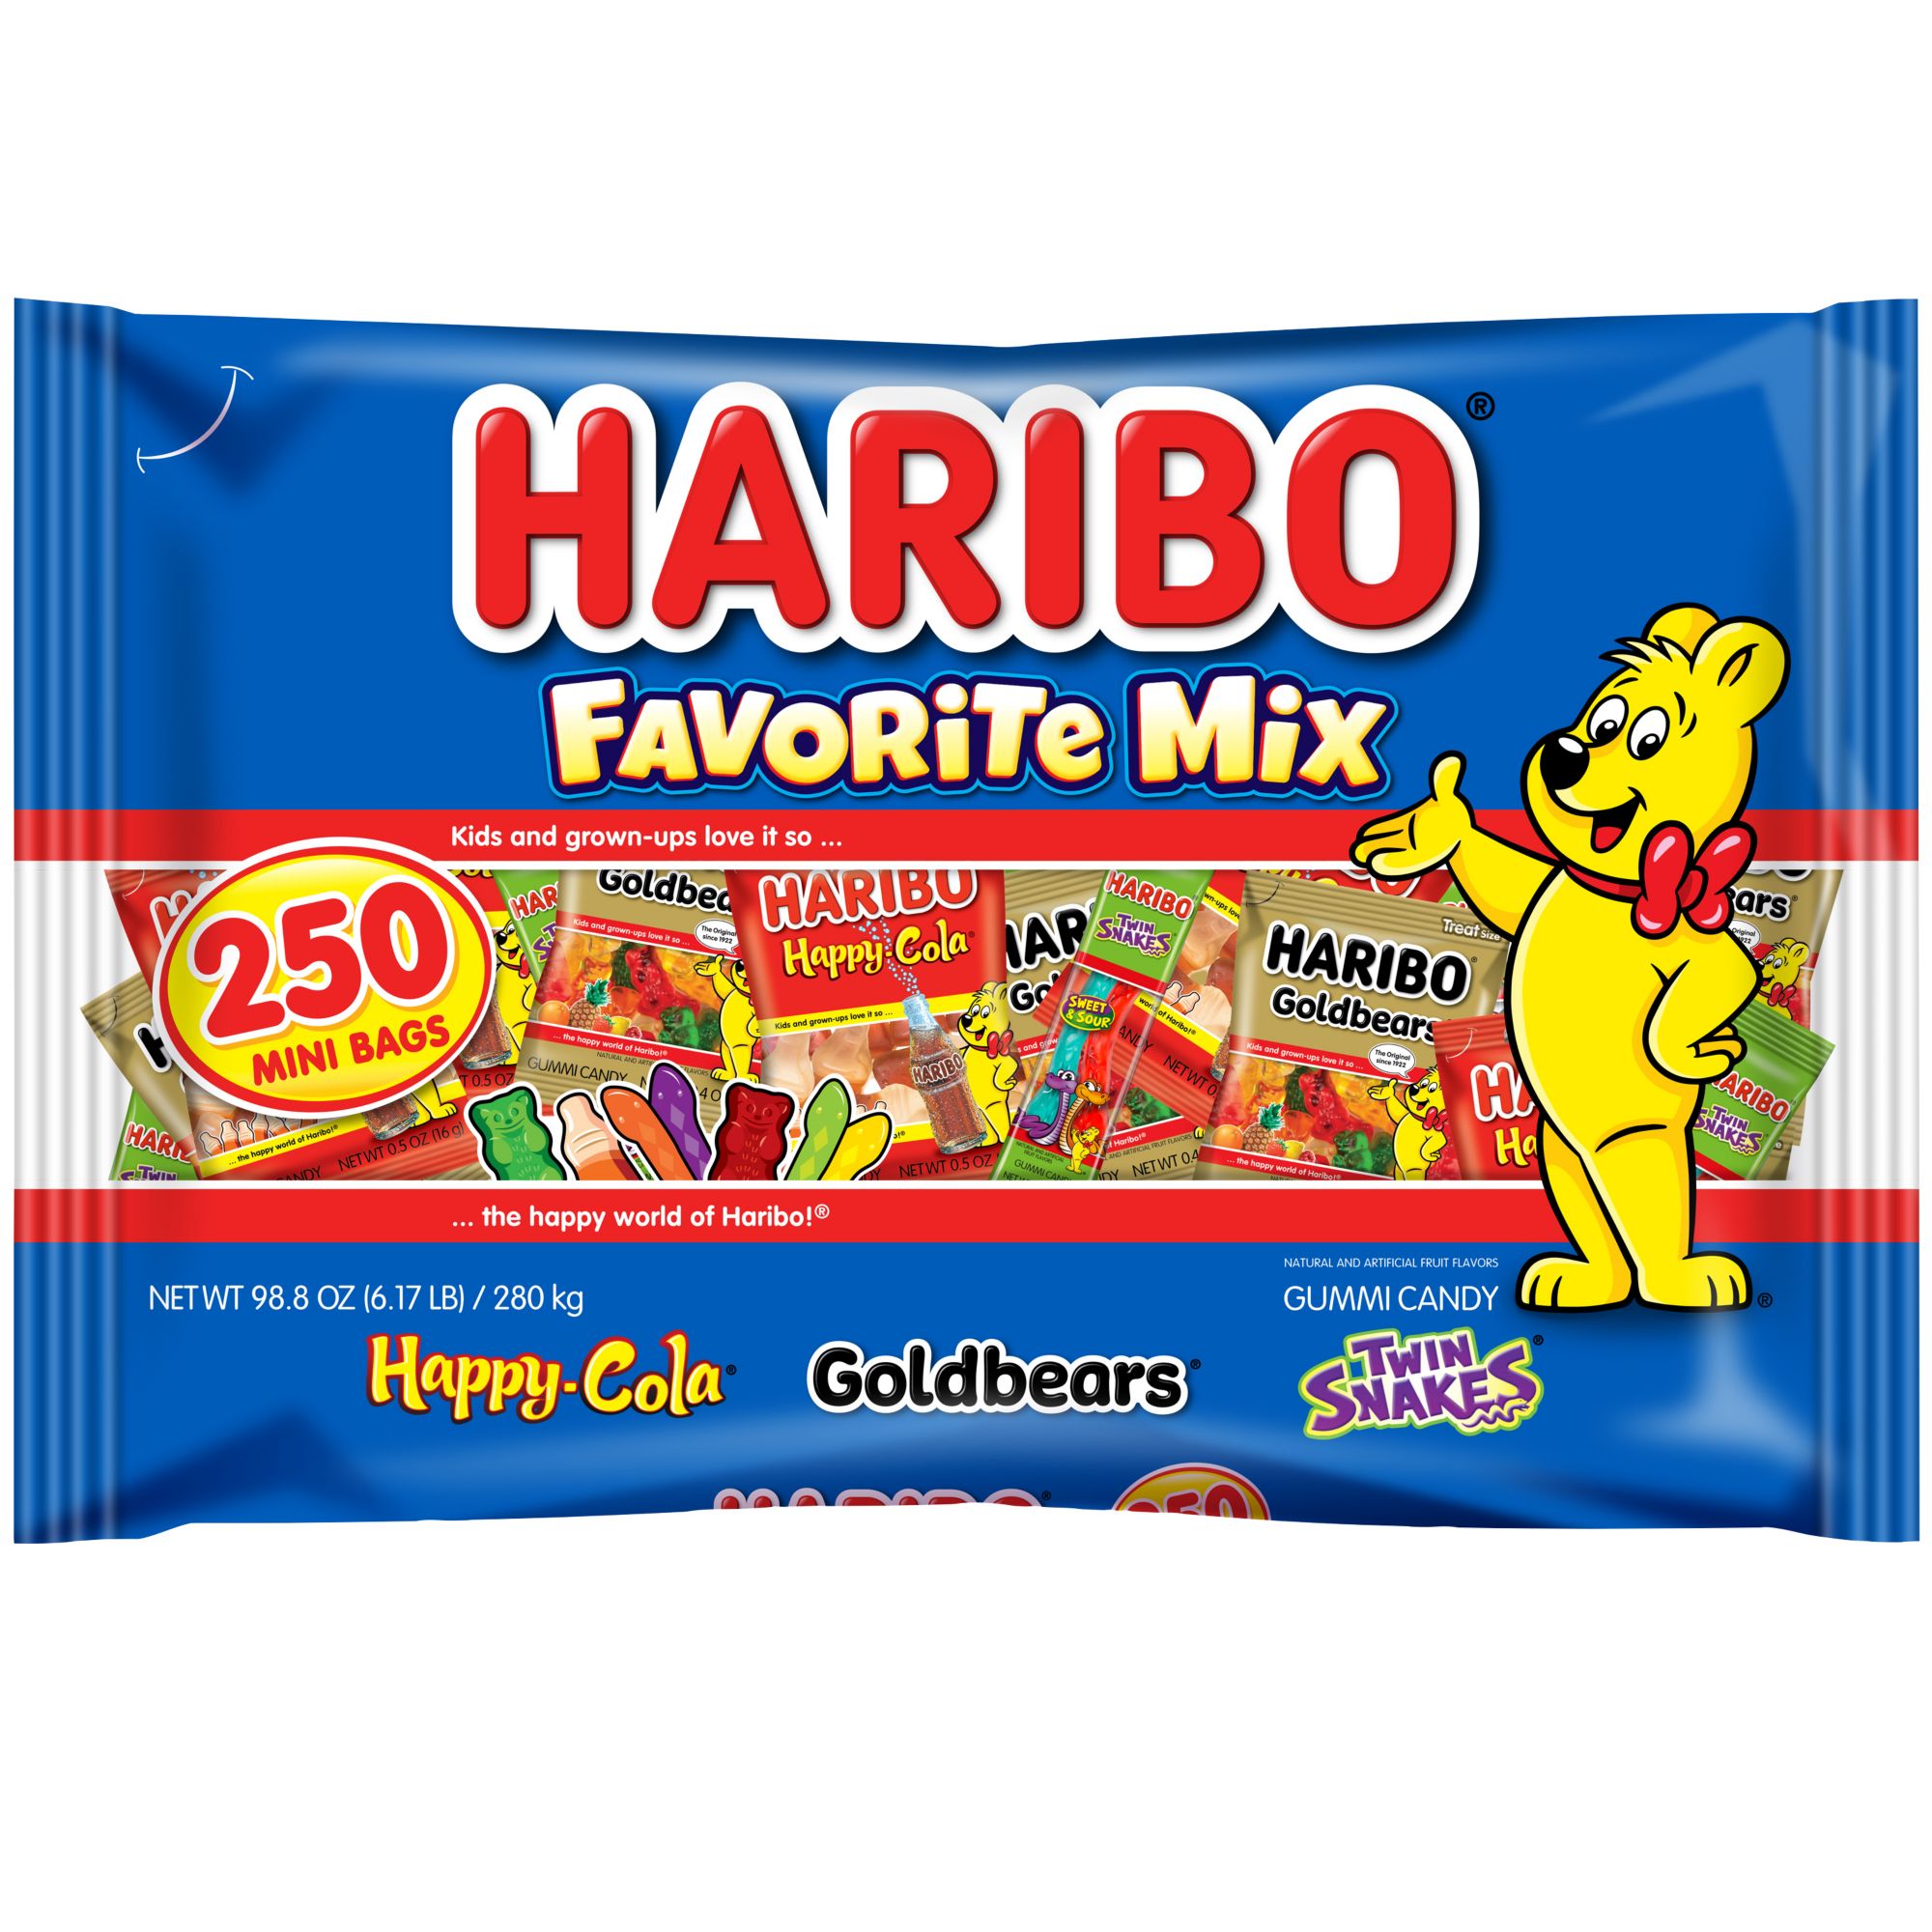 Haribo Sweets Pick n Mix Sizes 500g - 3kg Bulk Sweets - Perfect